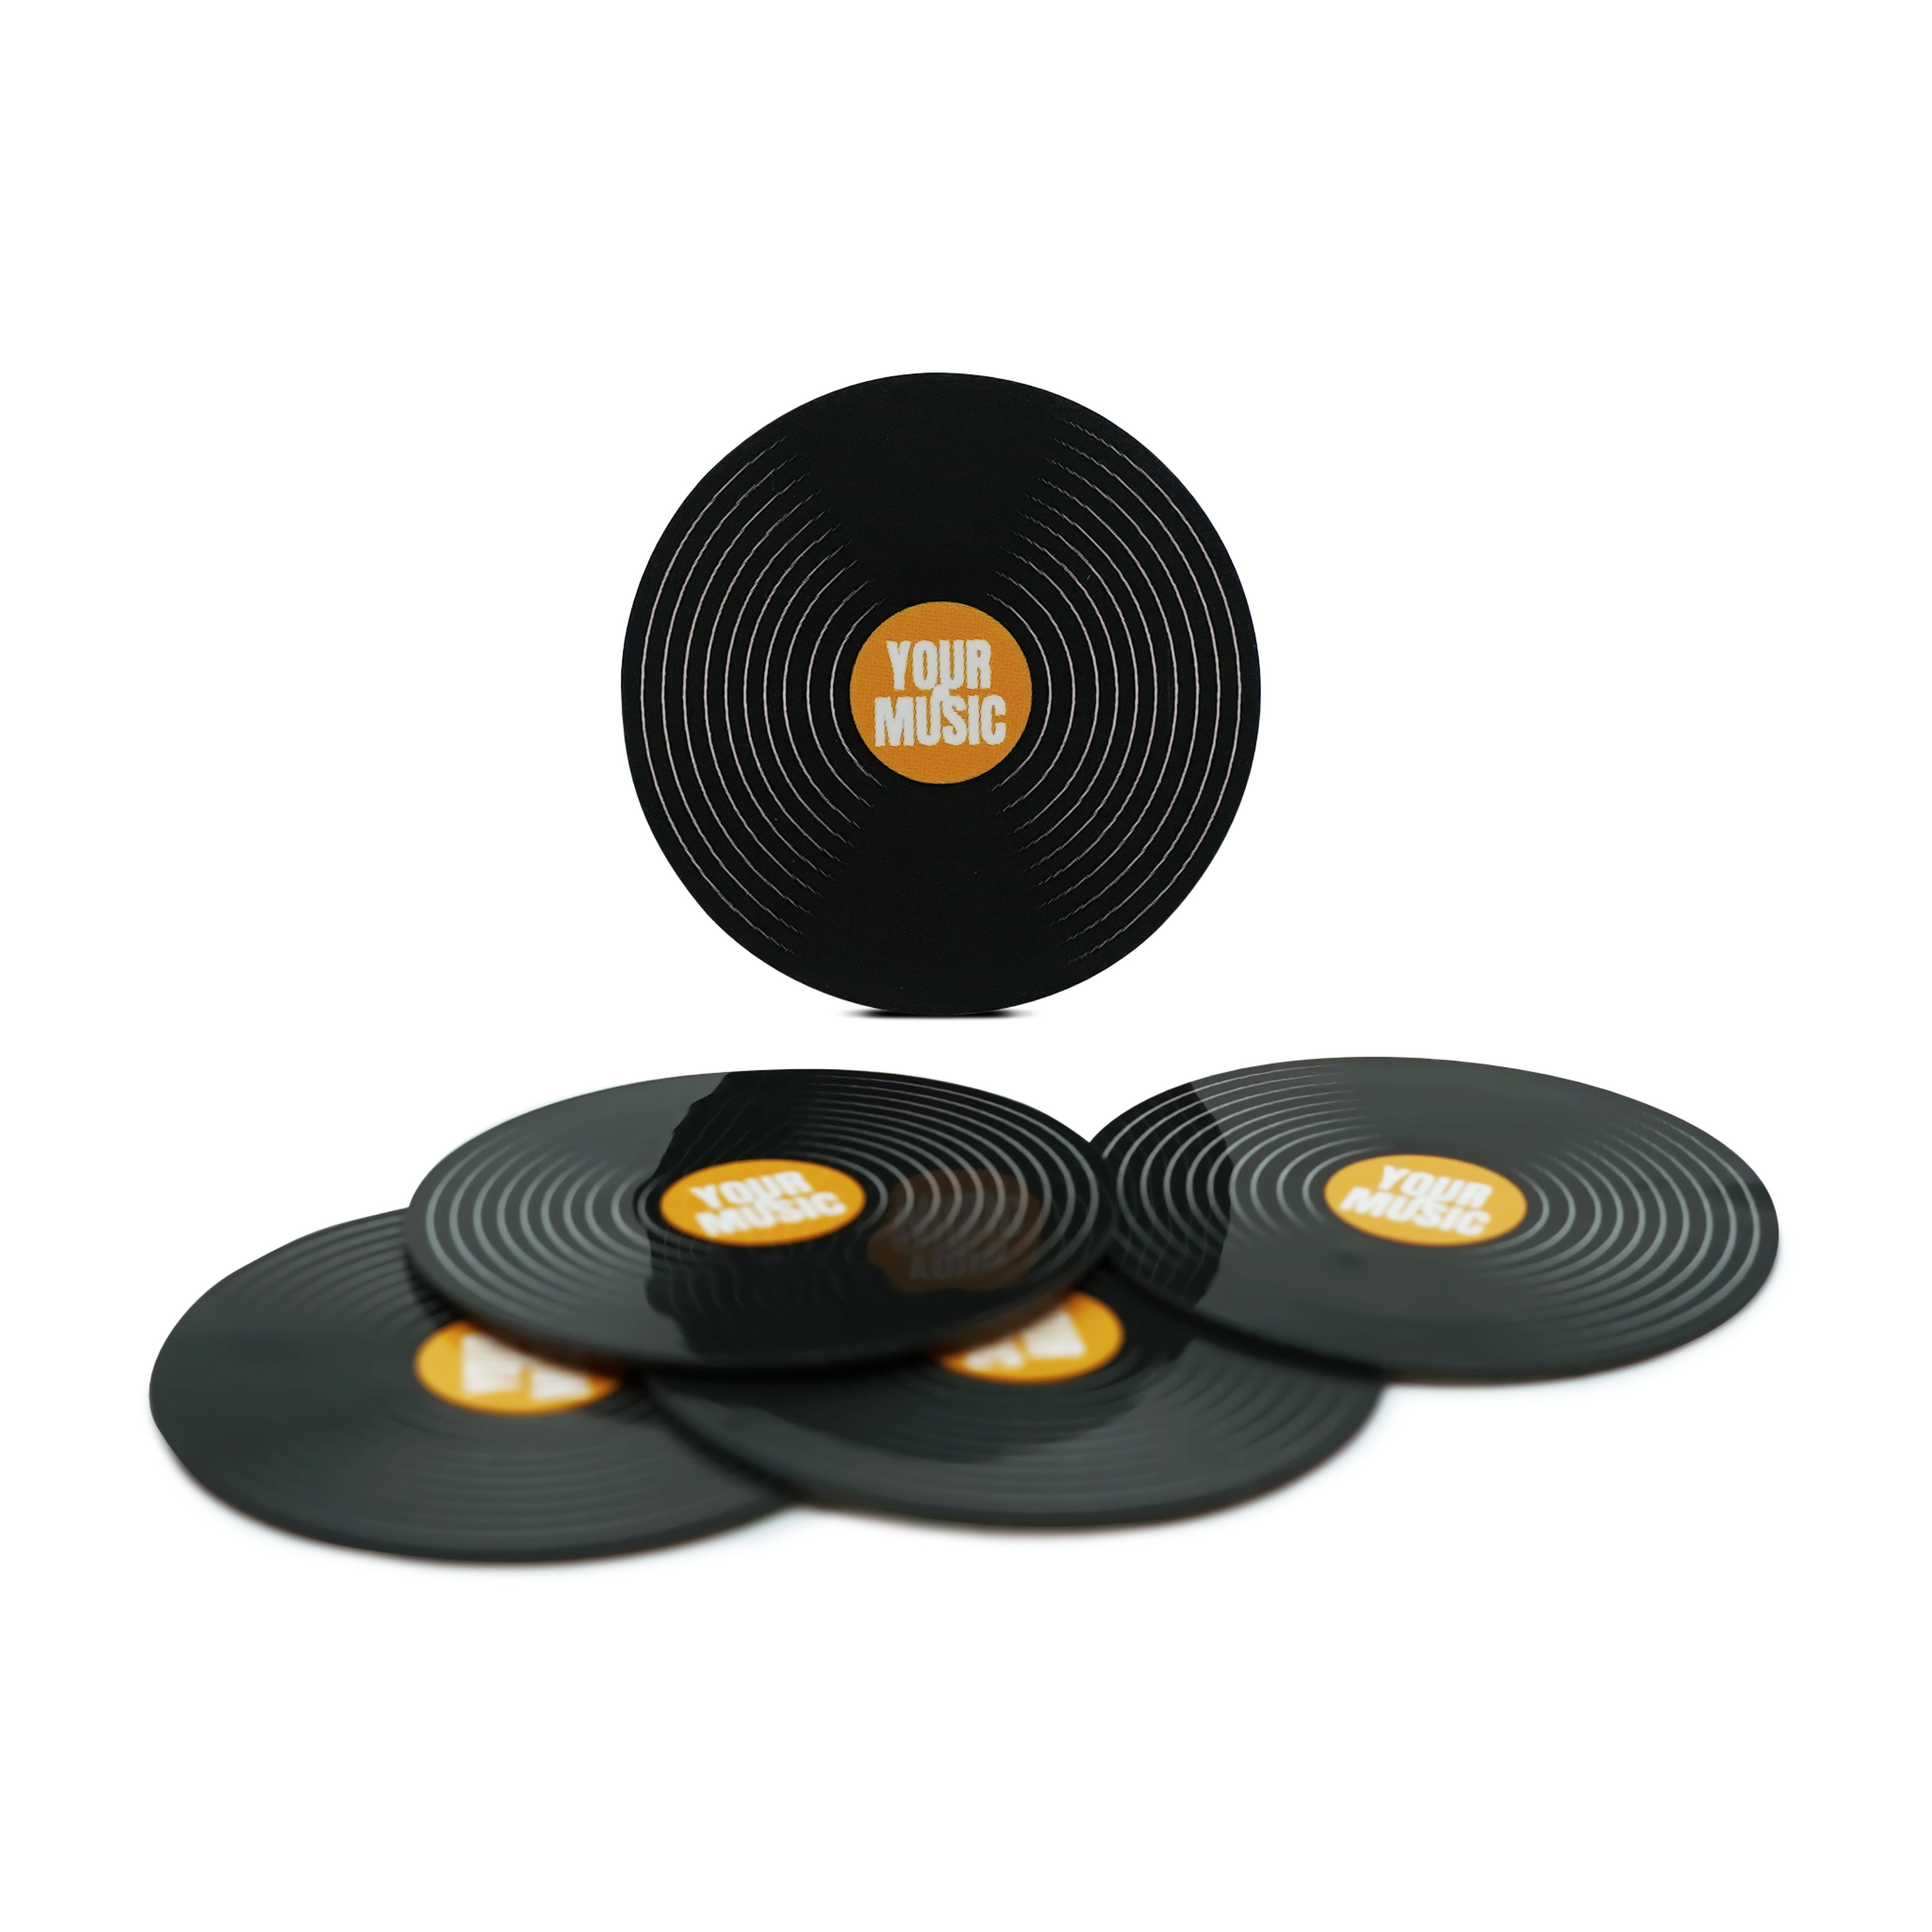  NFC Vibes Schallplatte - Digitaler Musiksticker - PET - 38 mm - schwarz - englisches Label